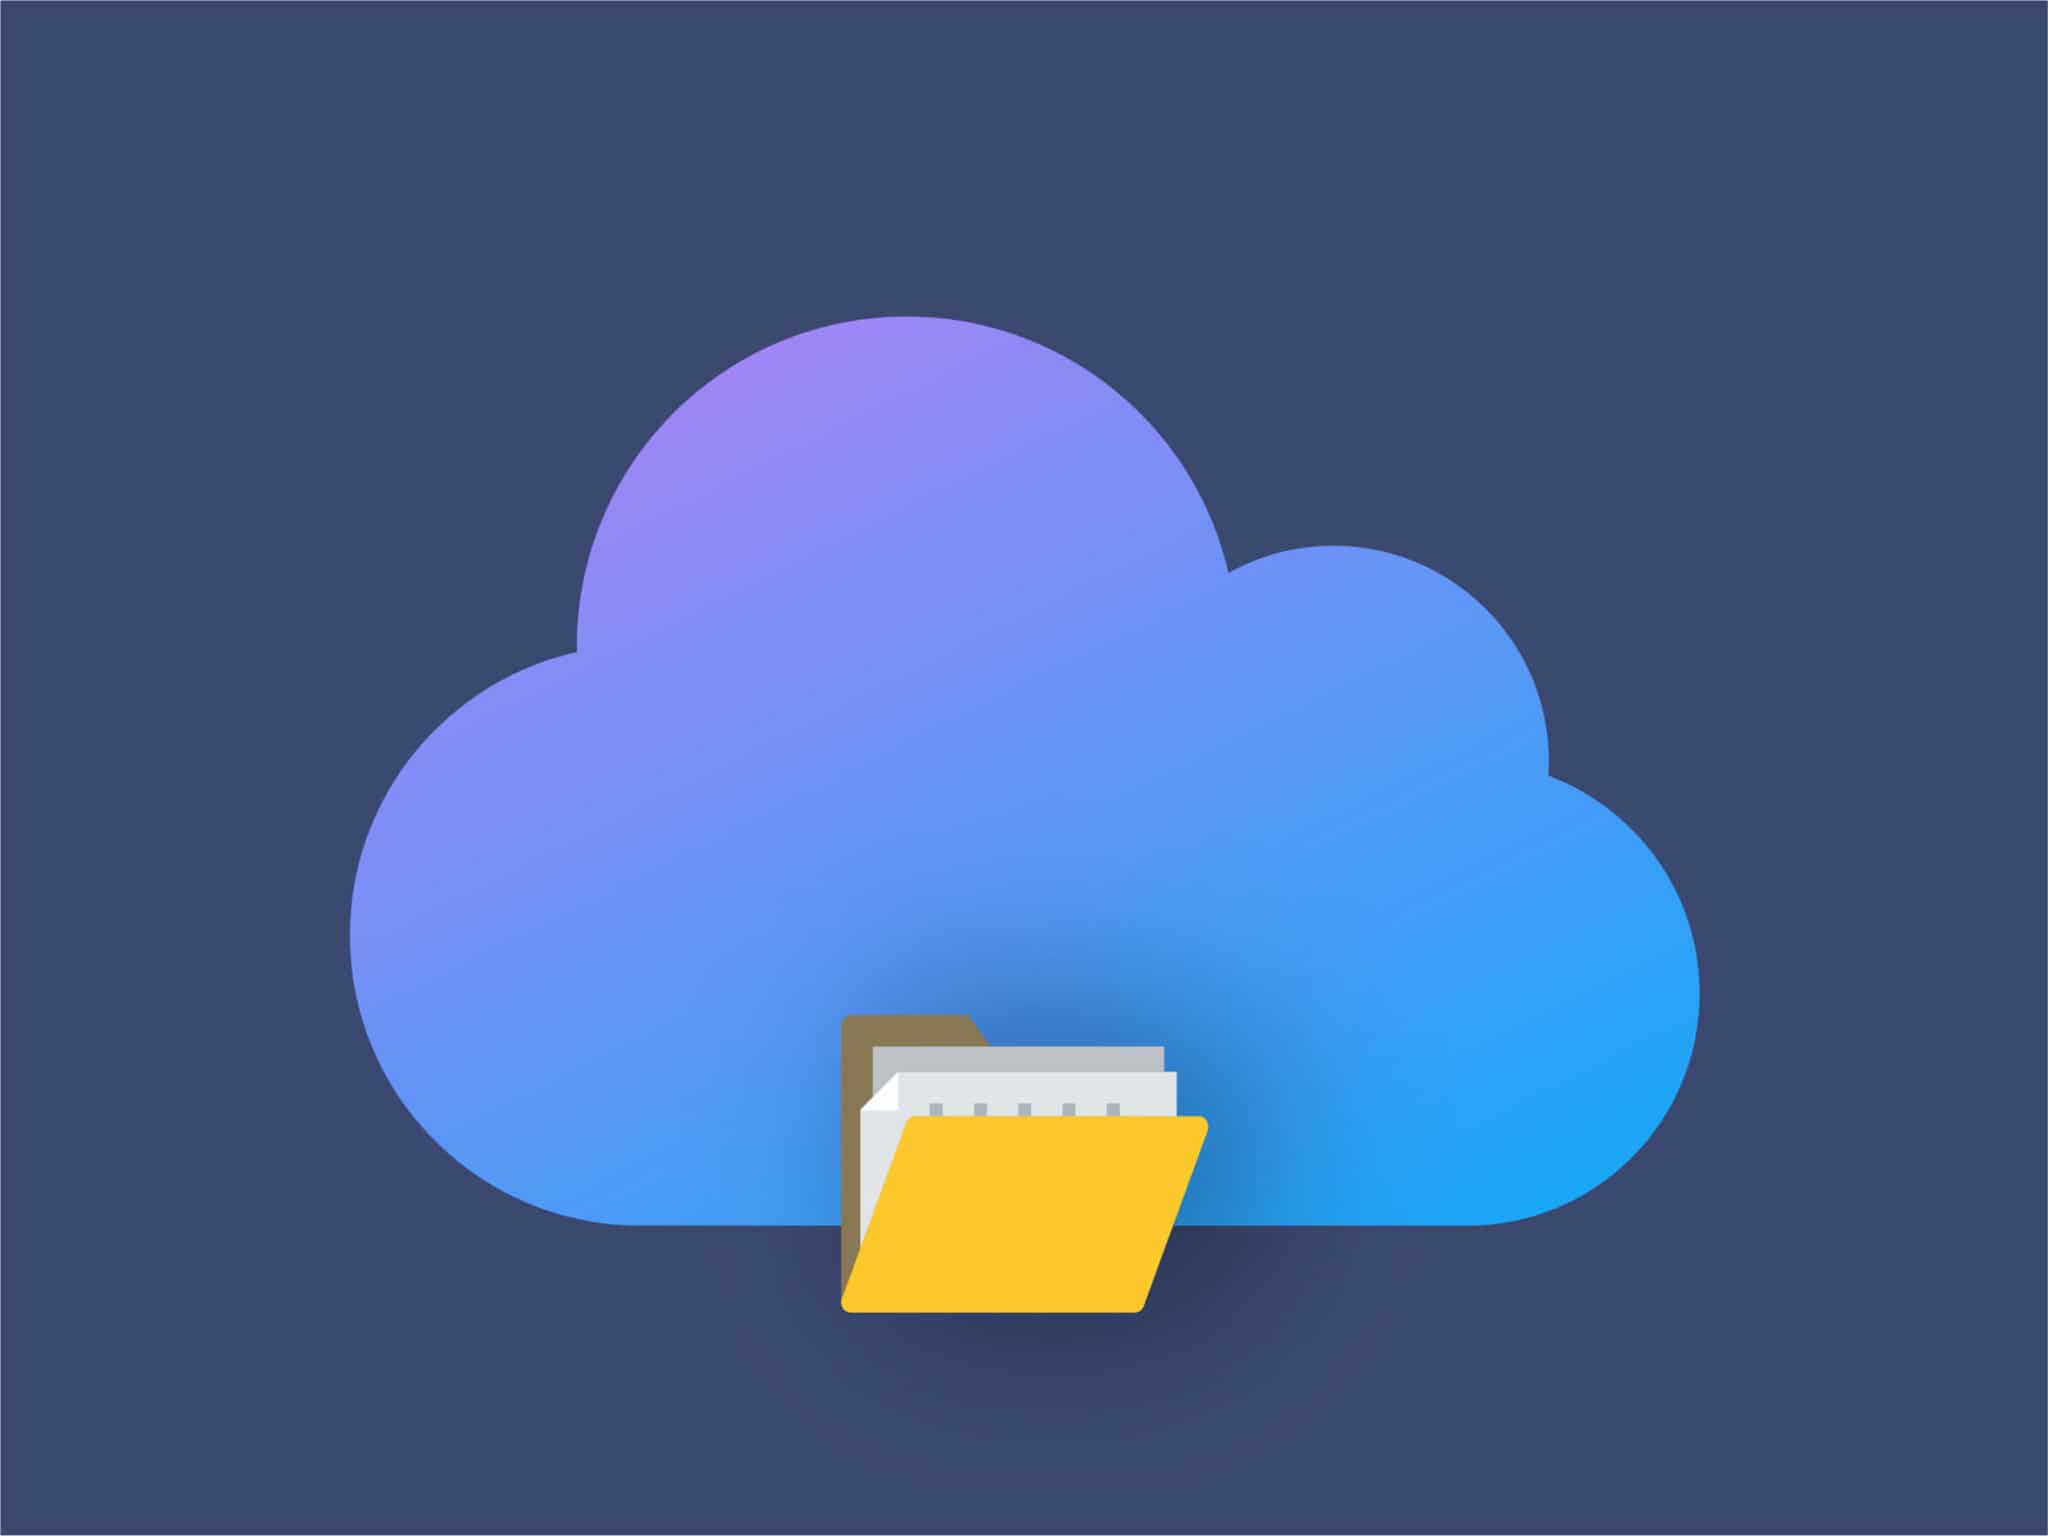 Xiaomi Cloud Storage